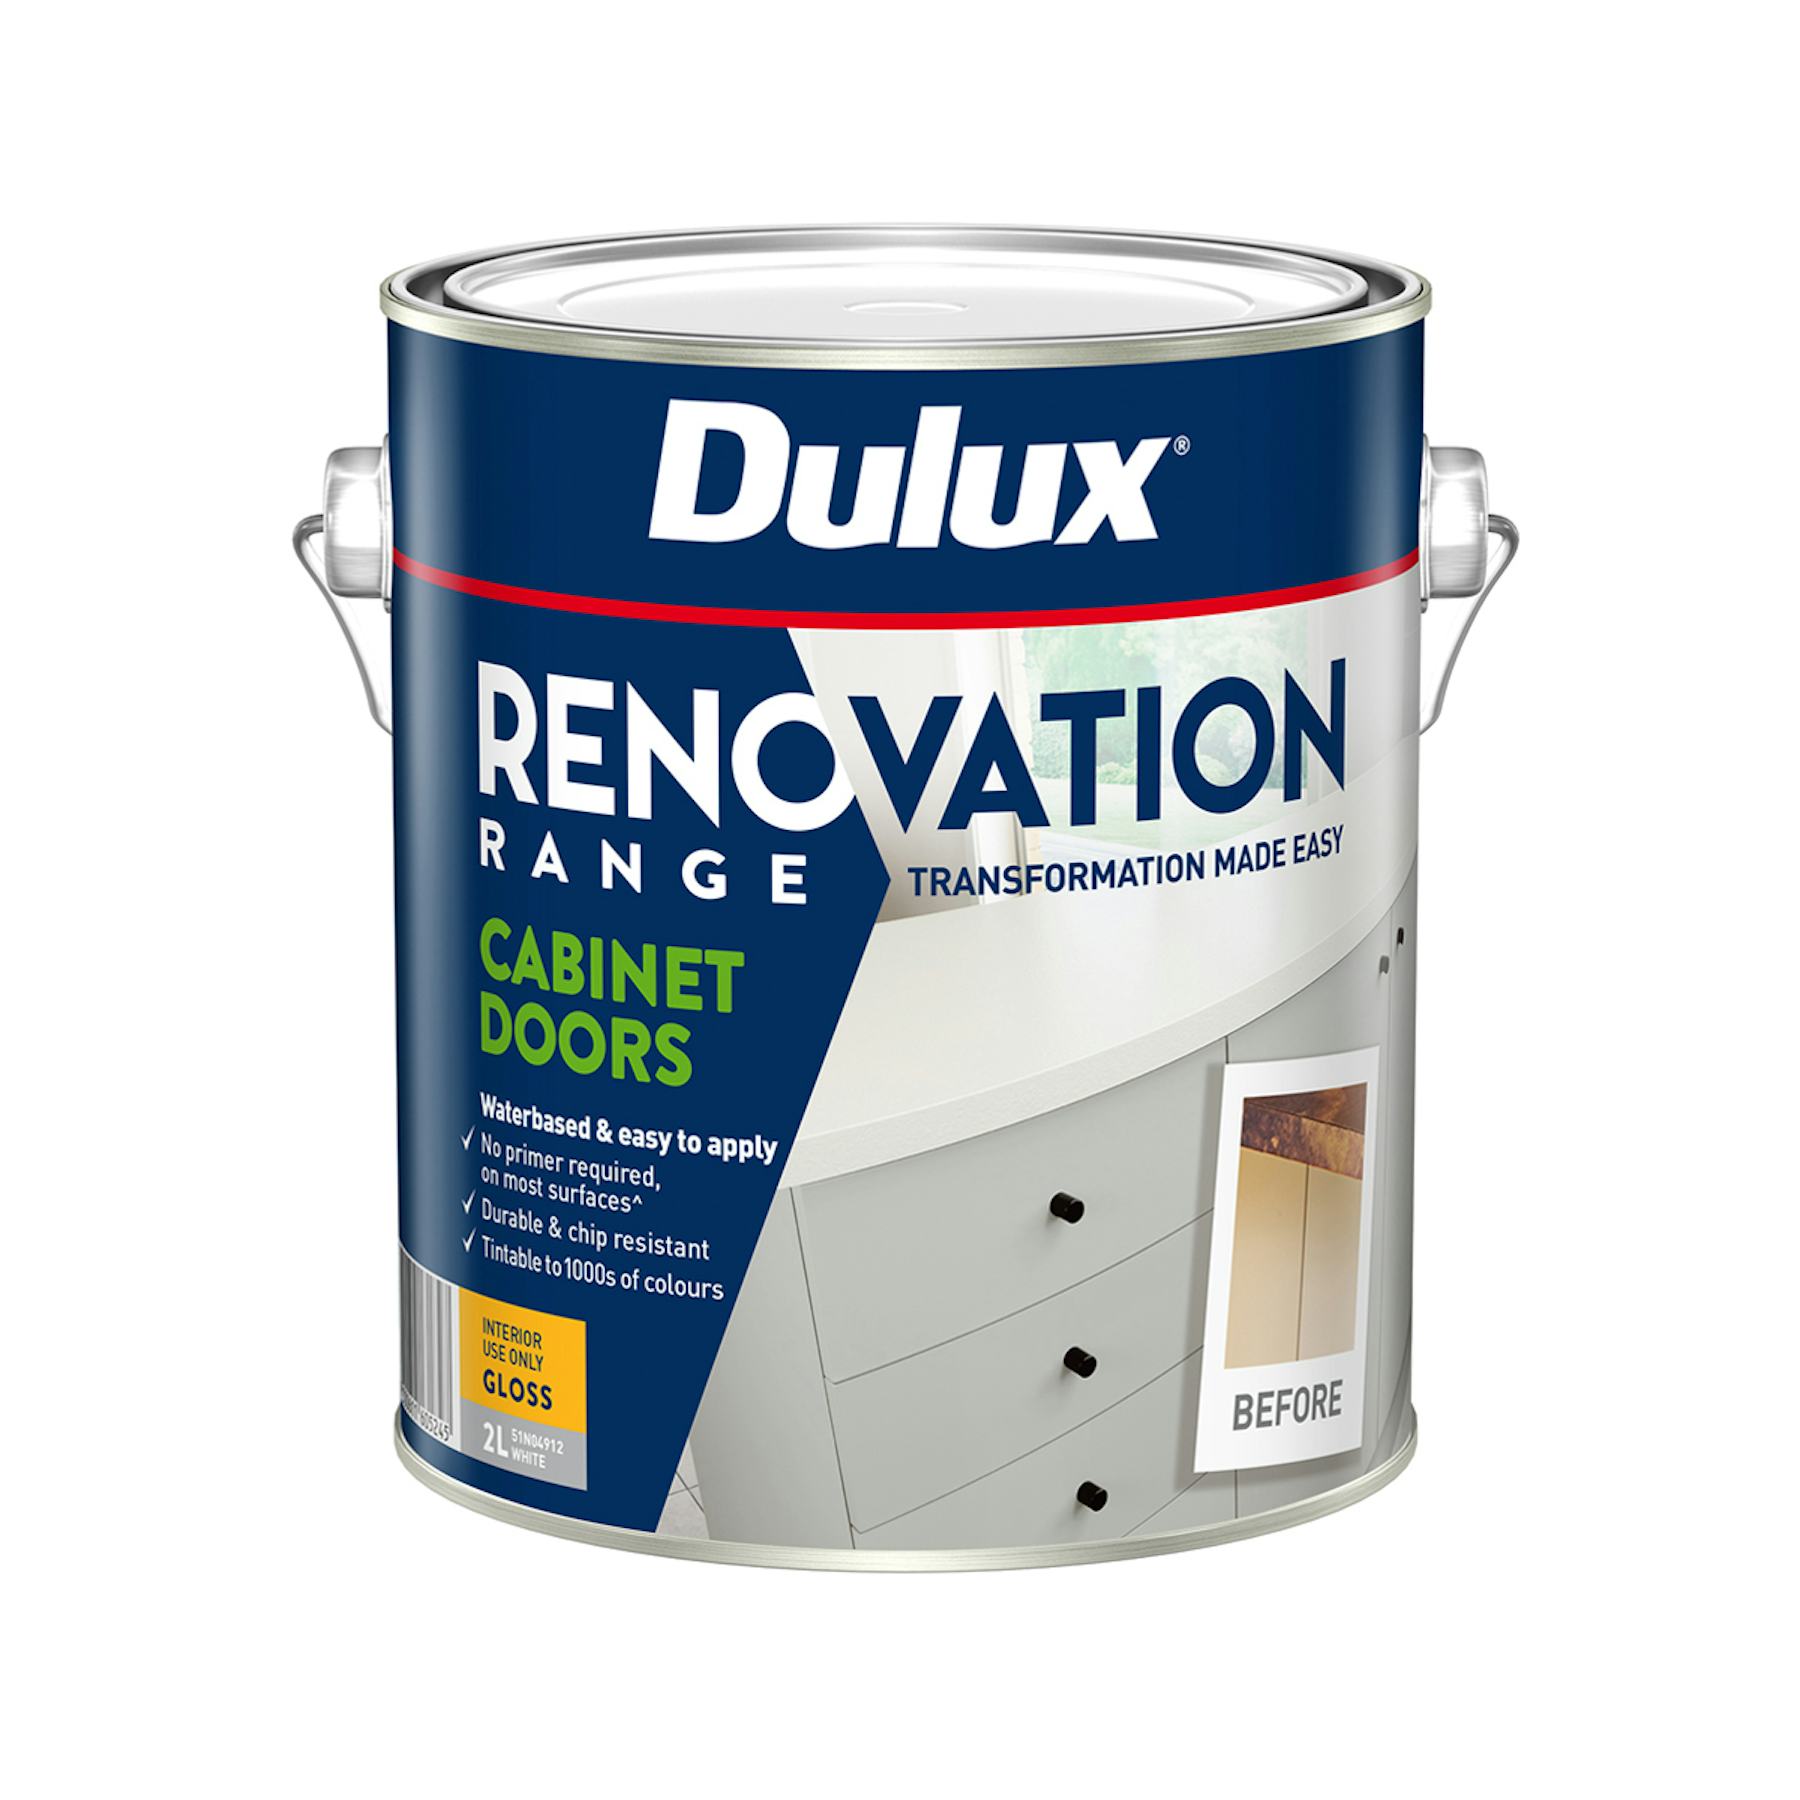 Dulux Renovation Cabinetdoors Gloss White 2l ?w=900&h=900&auto=format&dpr=2&q=50